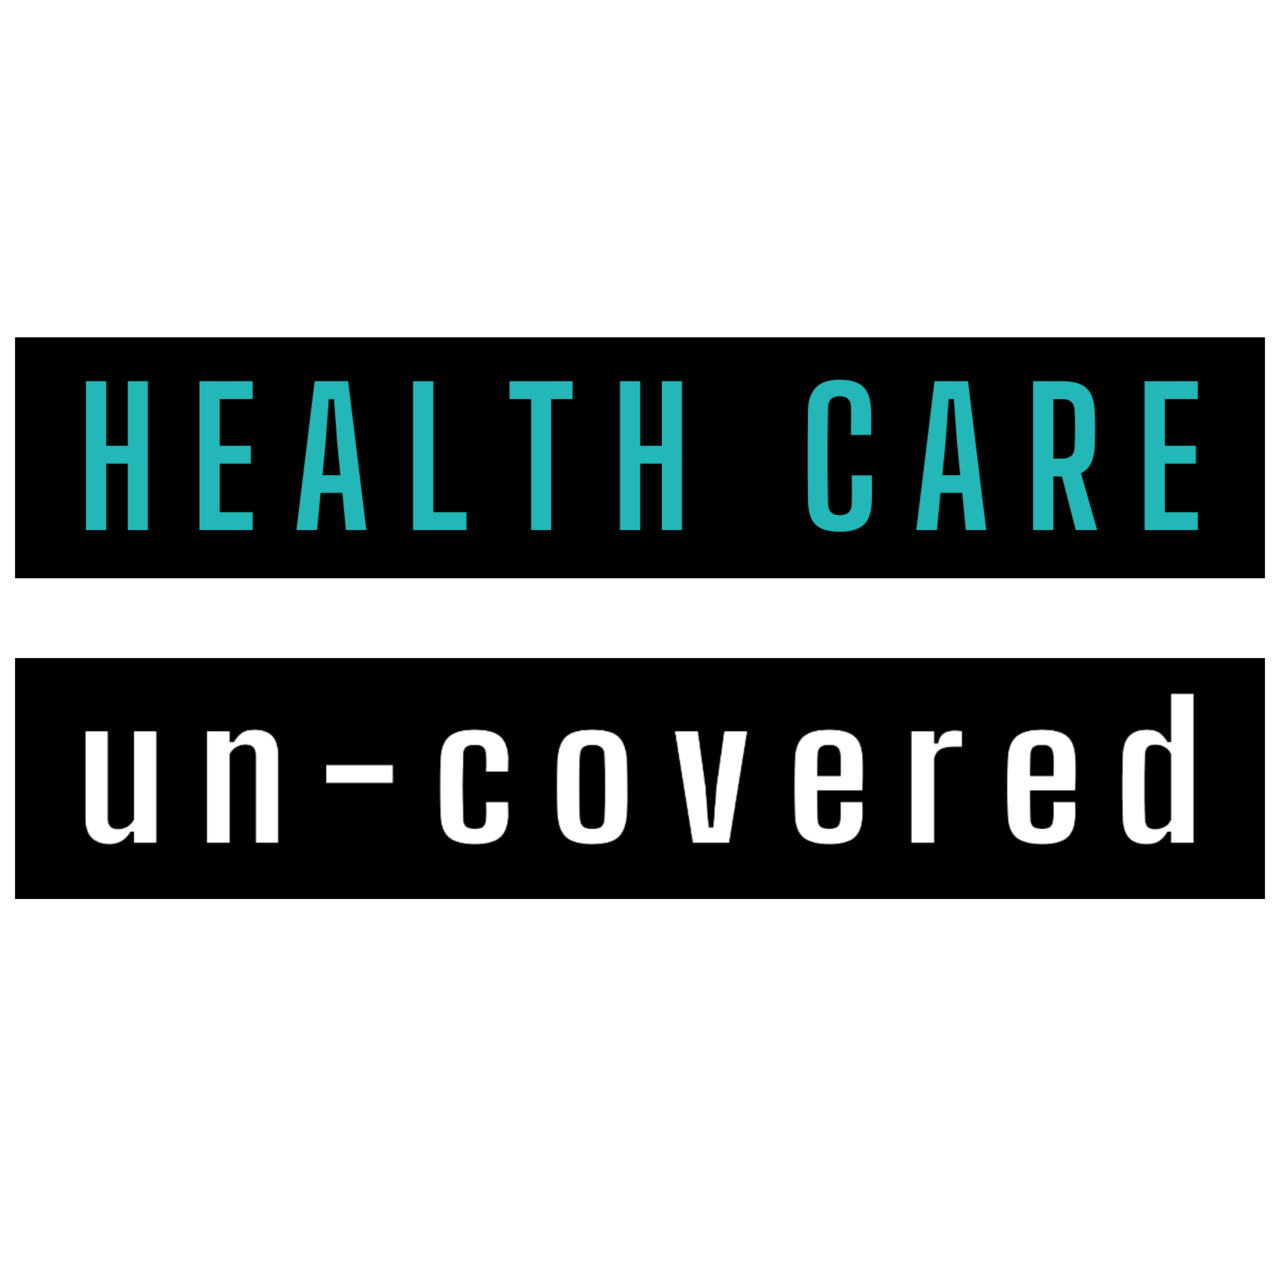 Artwork for HEALTH CARE un-covered